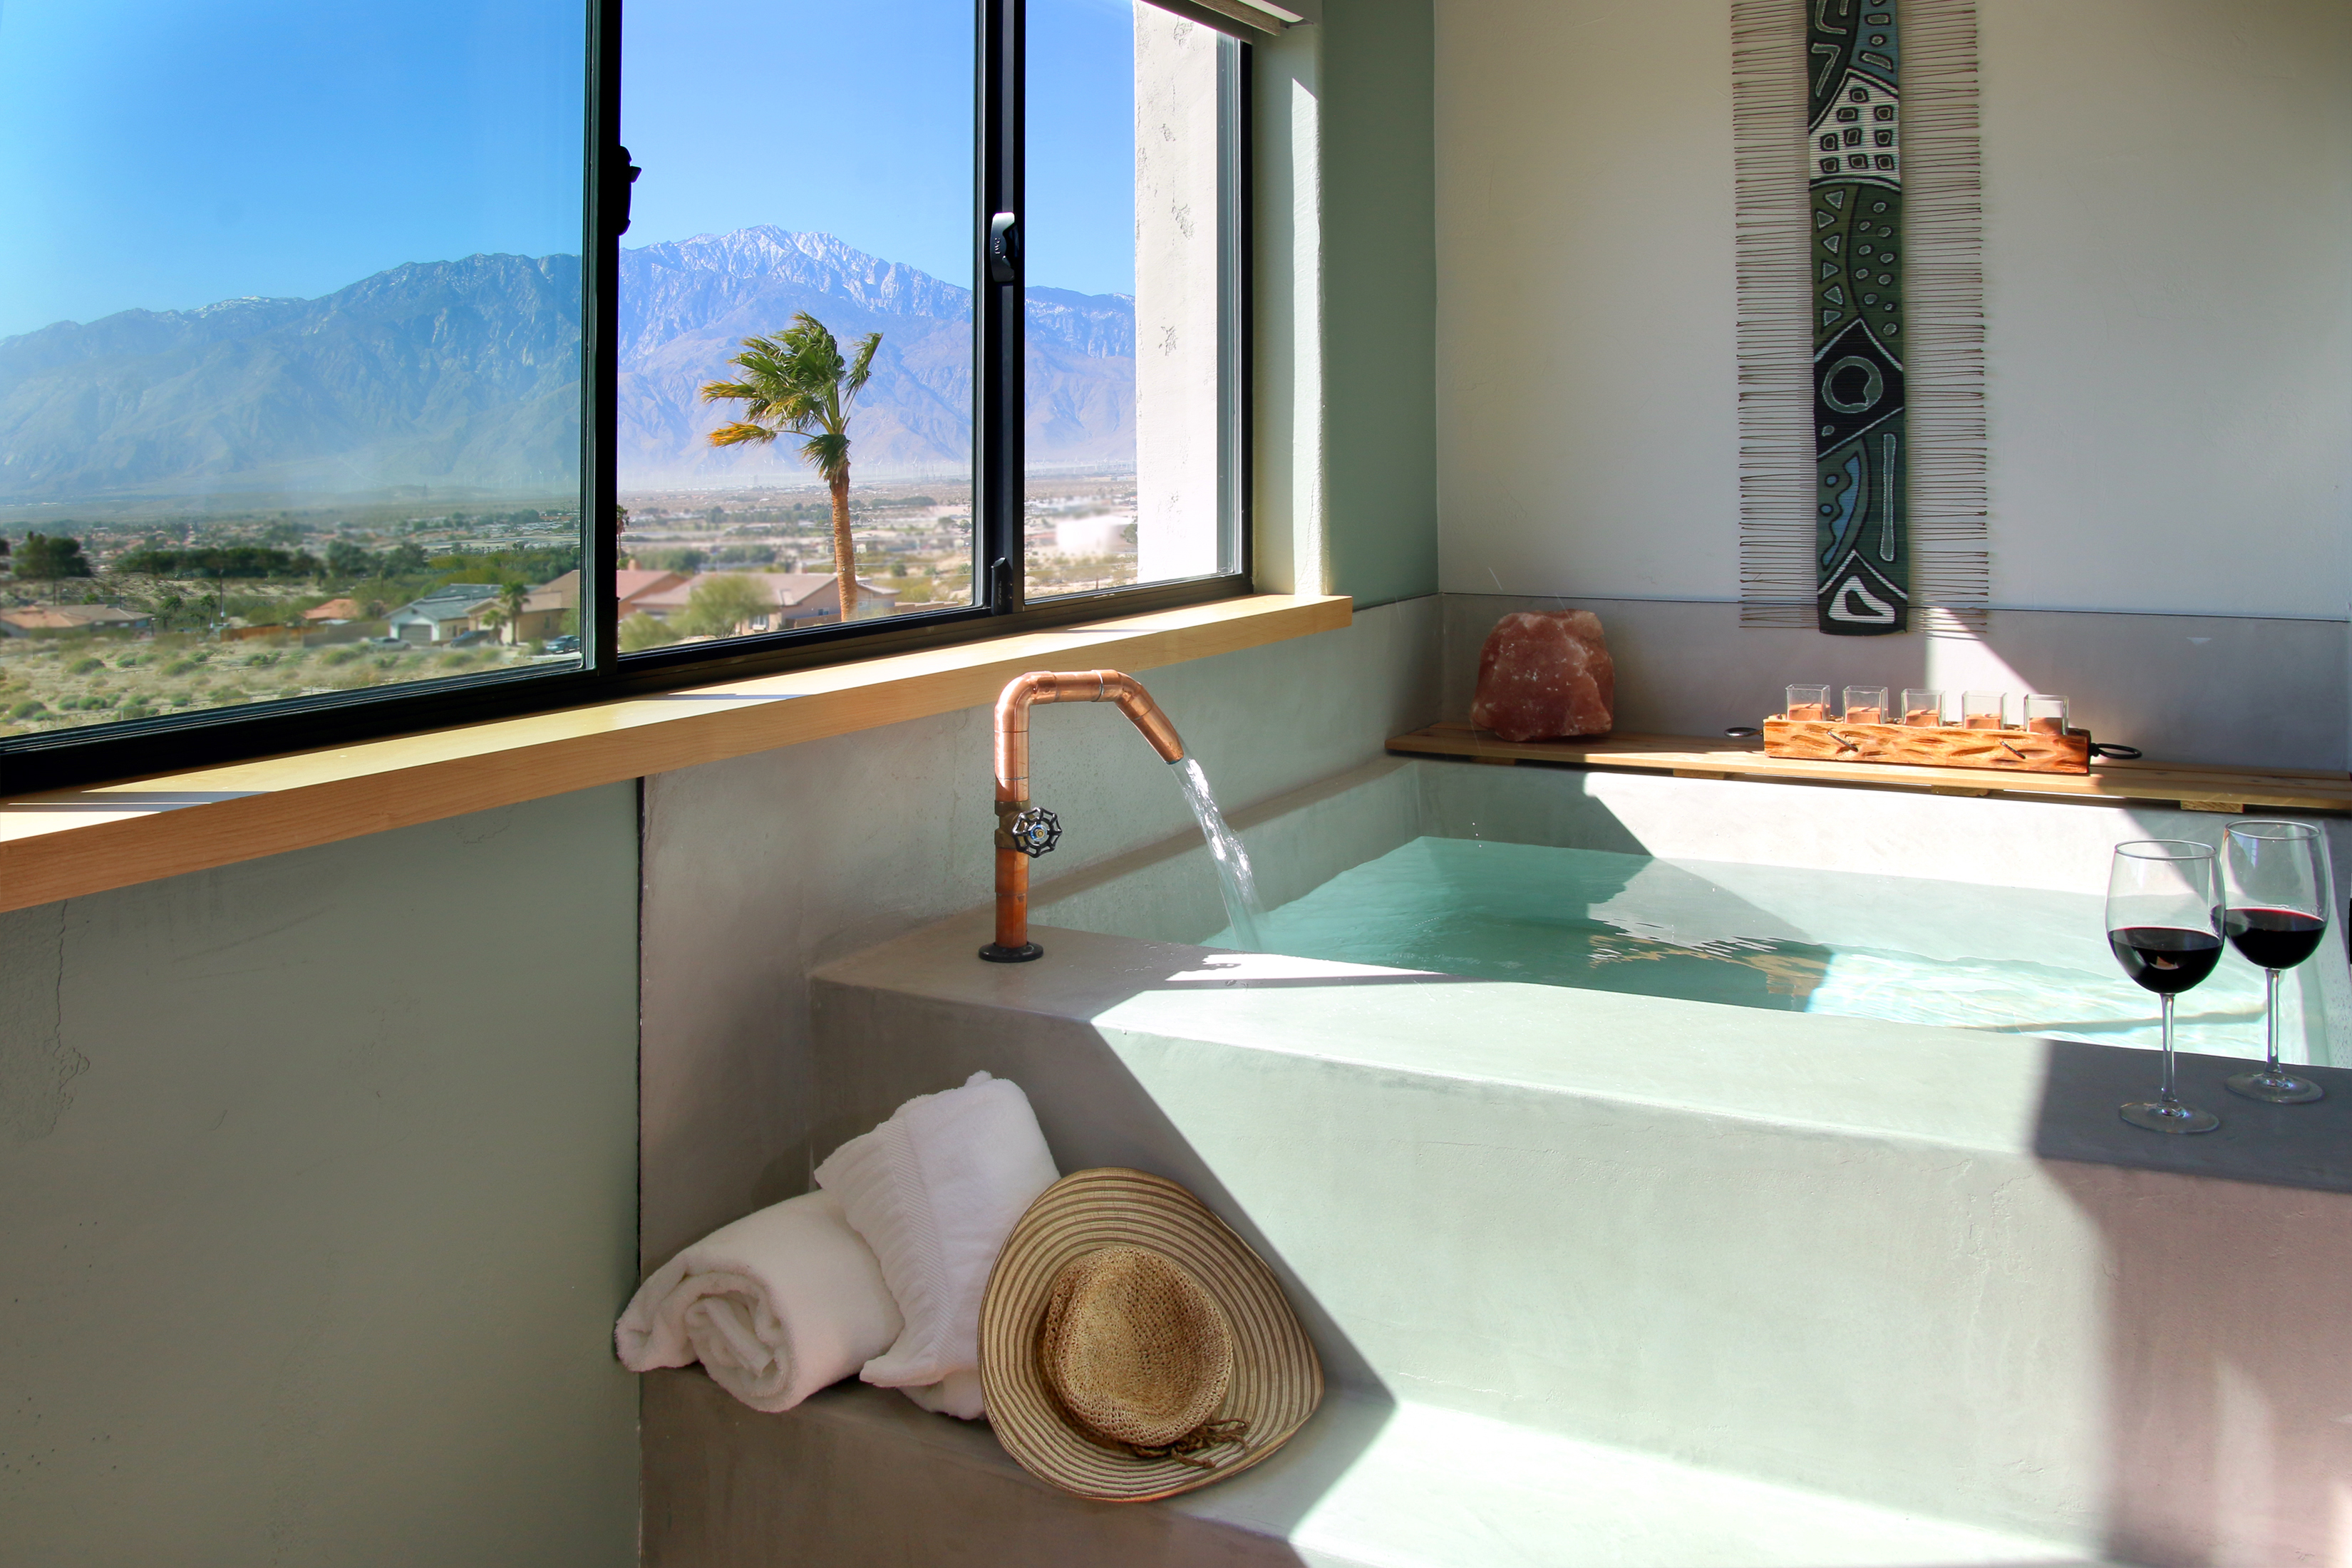 Review: The Azure Palm Springs Has In-Room Hot Springs Tubs - InsideHook